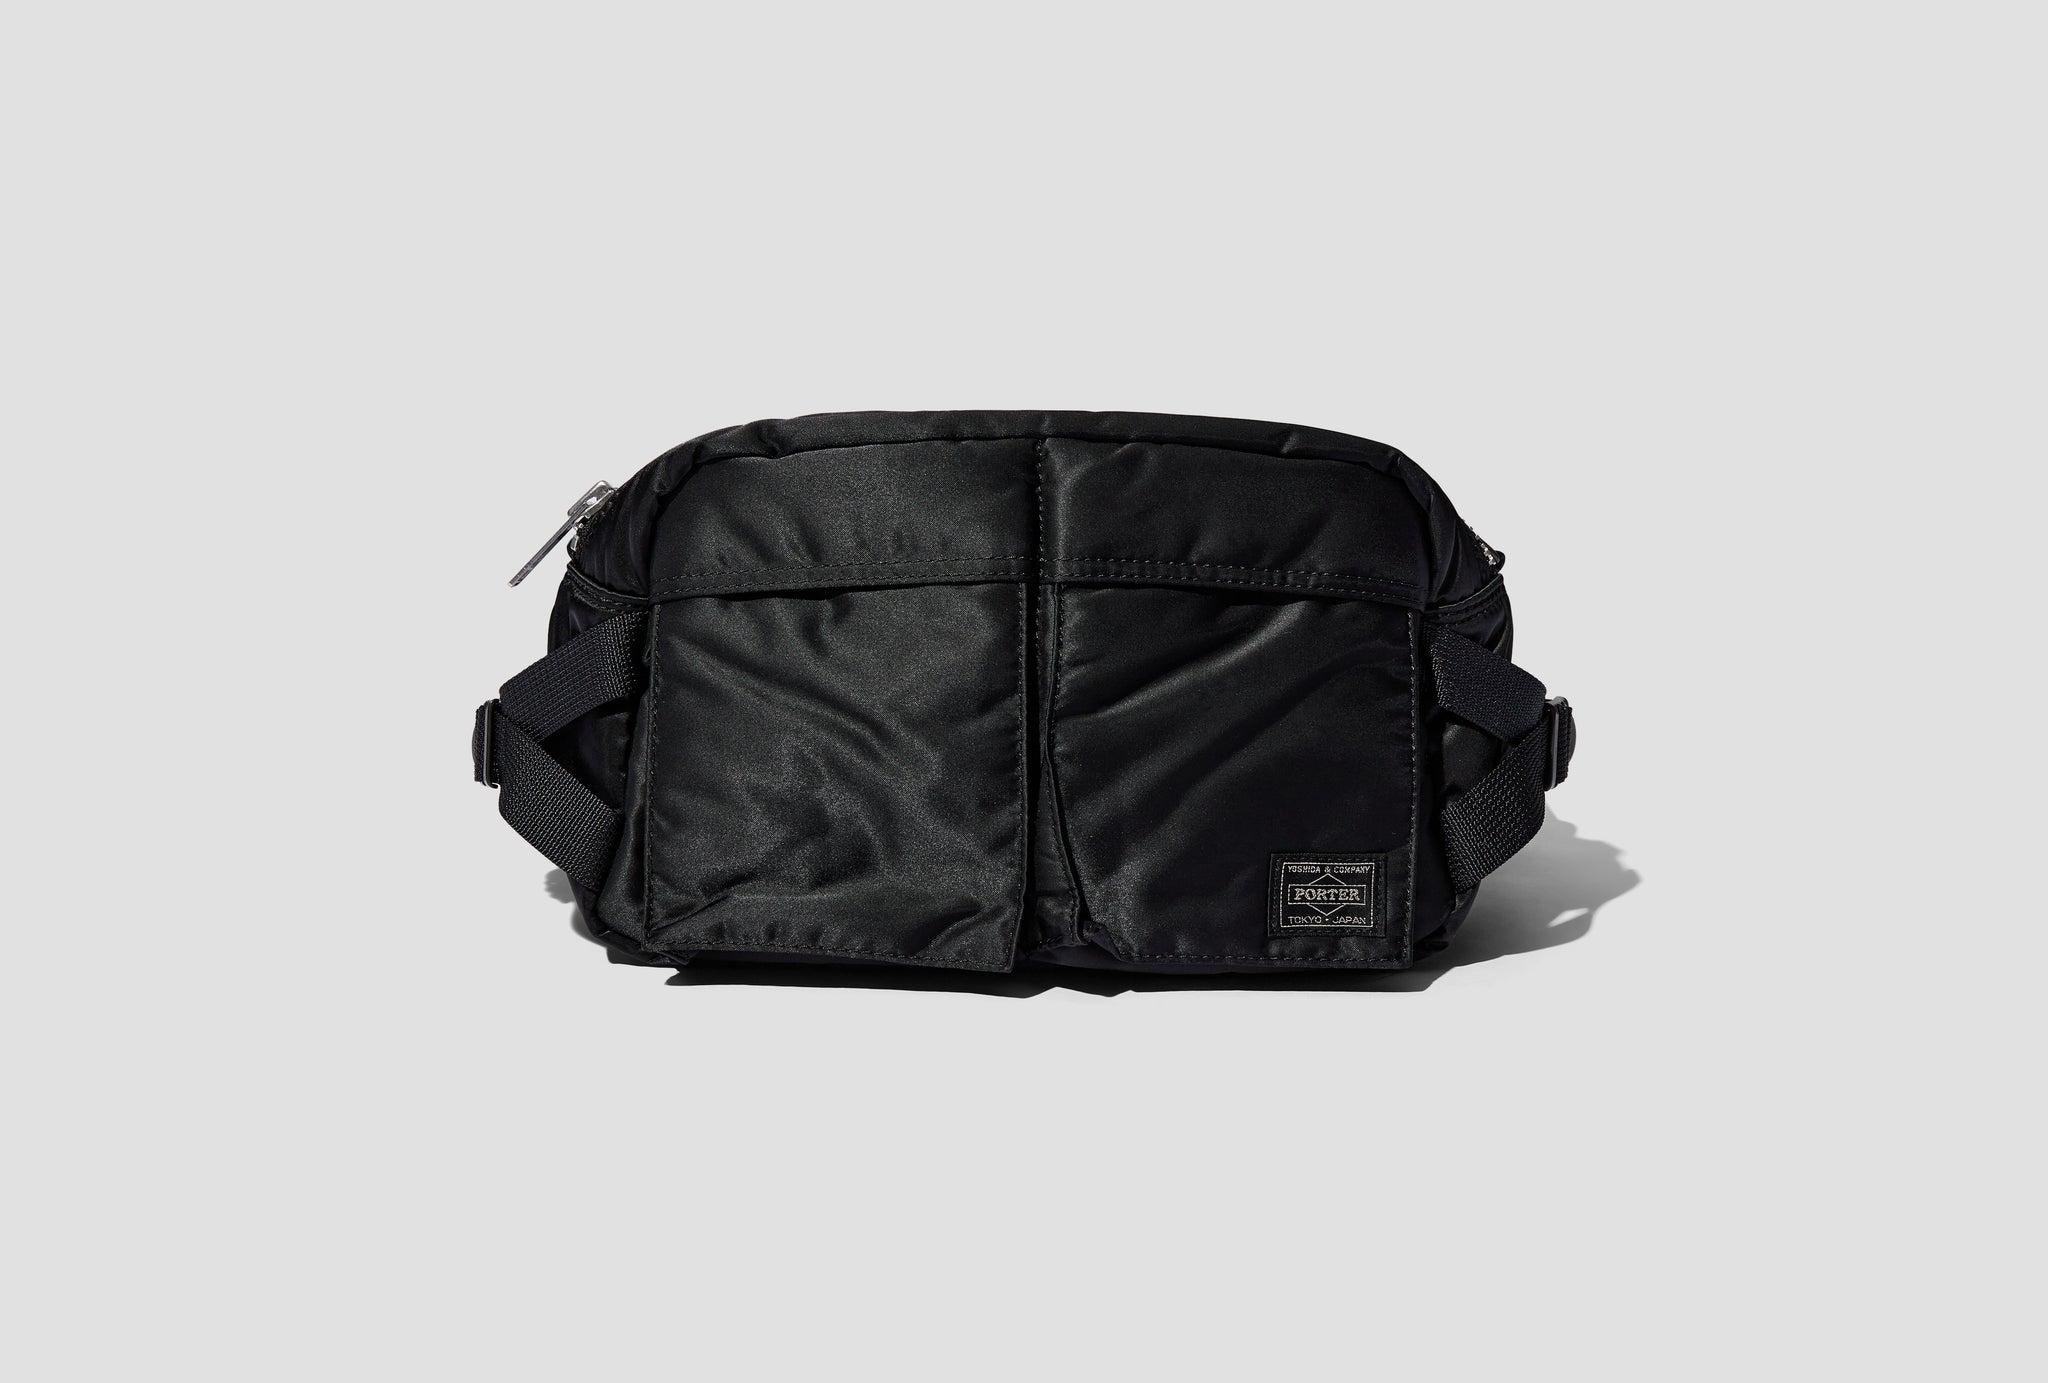 Porter-Yoshida & Co. TANKER WAIST BAG Black